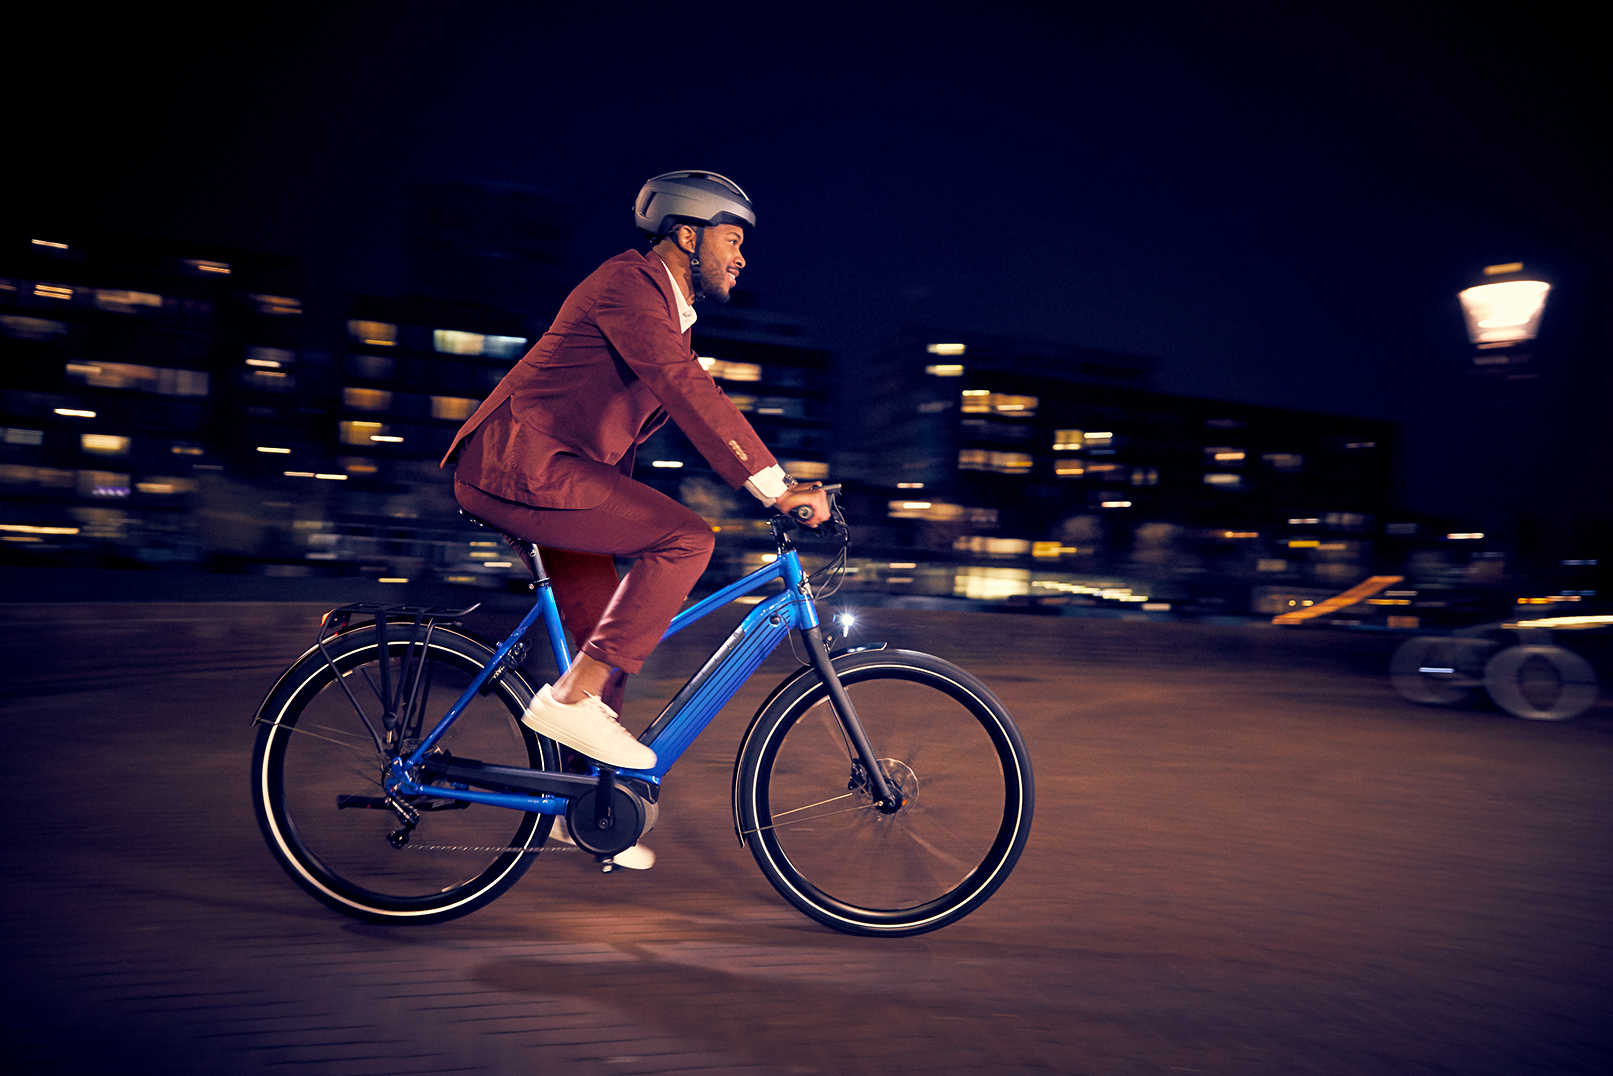 Mand om aftenen på cykel | Cykellygter